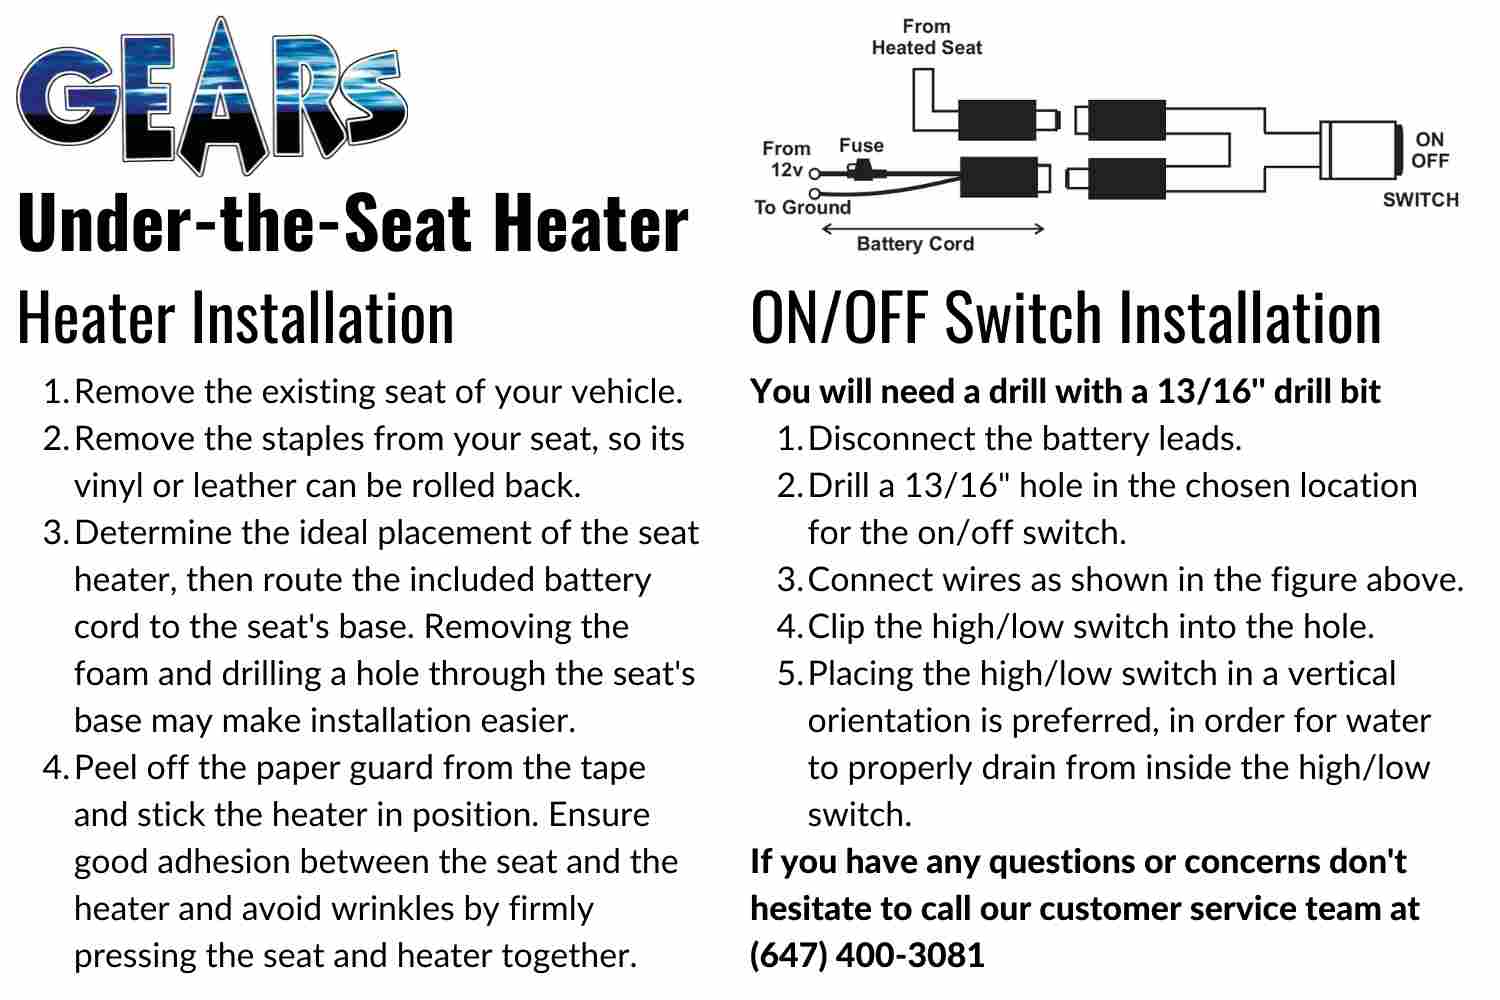 Seat heater installation instructions